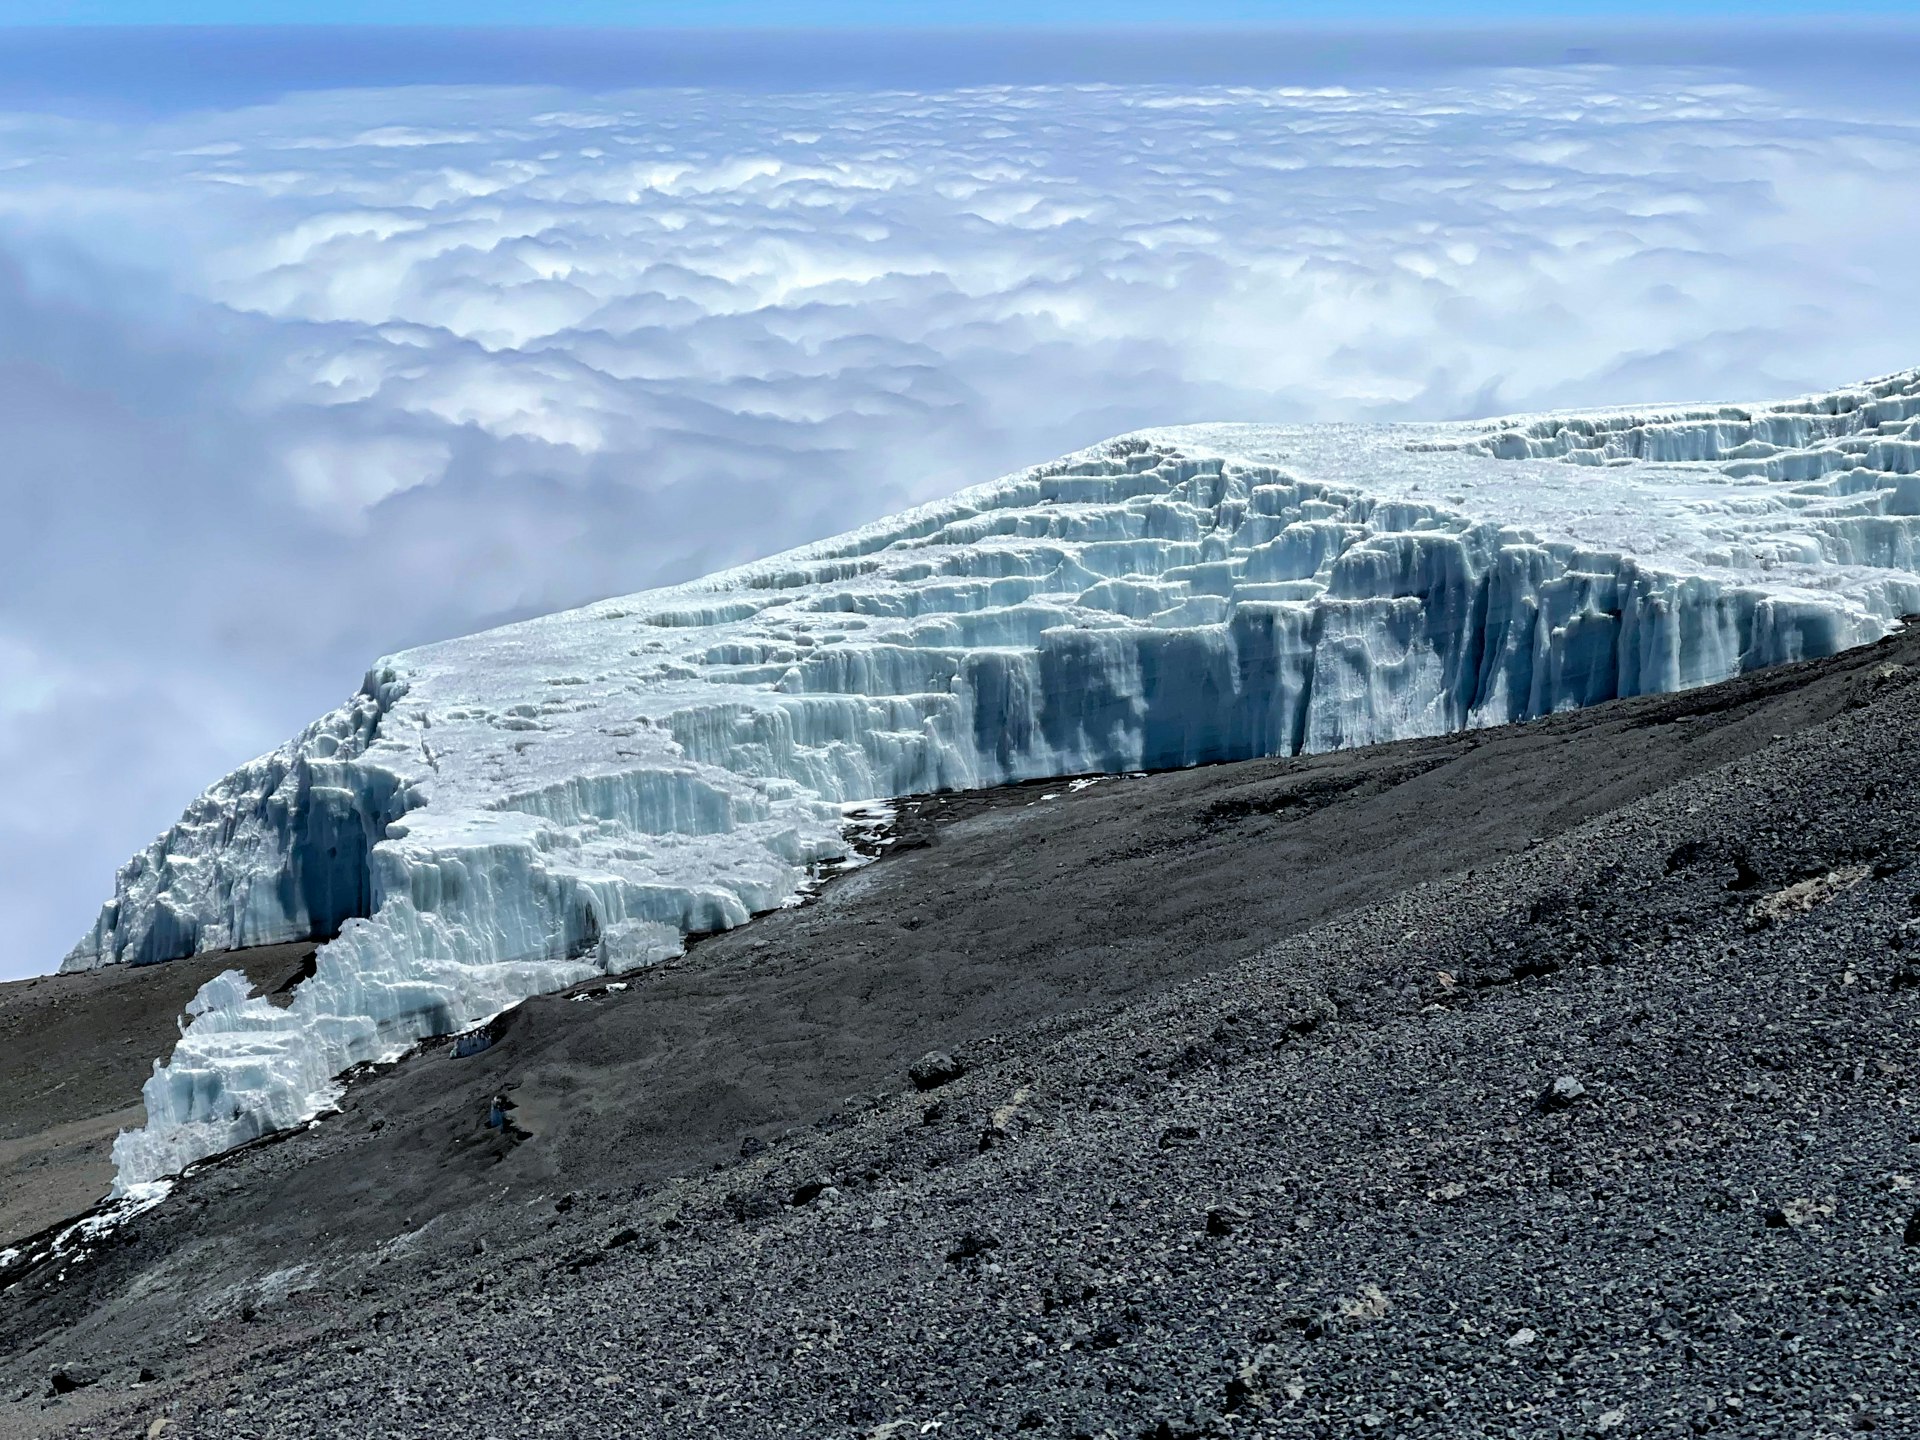 Receding glaciers can be seen from Uhuru Peak